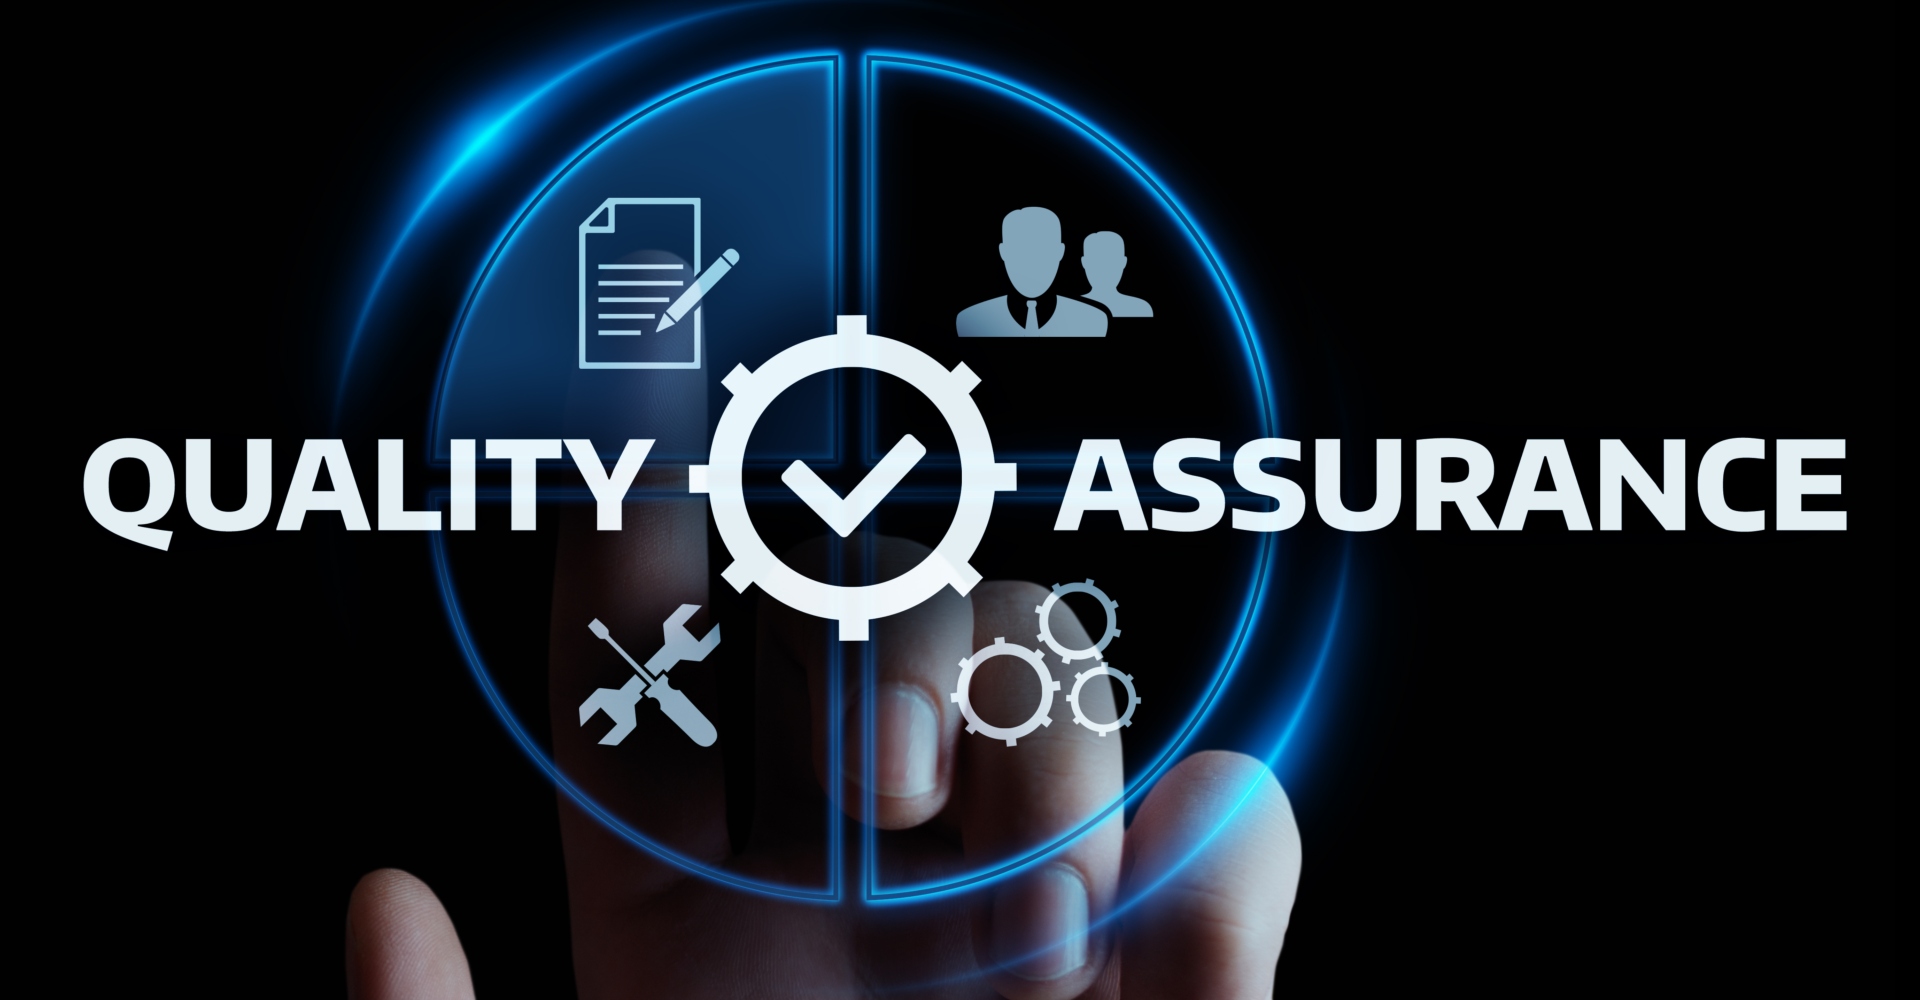 Quality Assurance Service Guarantee Standard Internet Business Technology Concept.